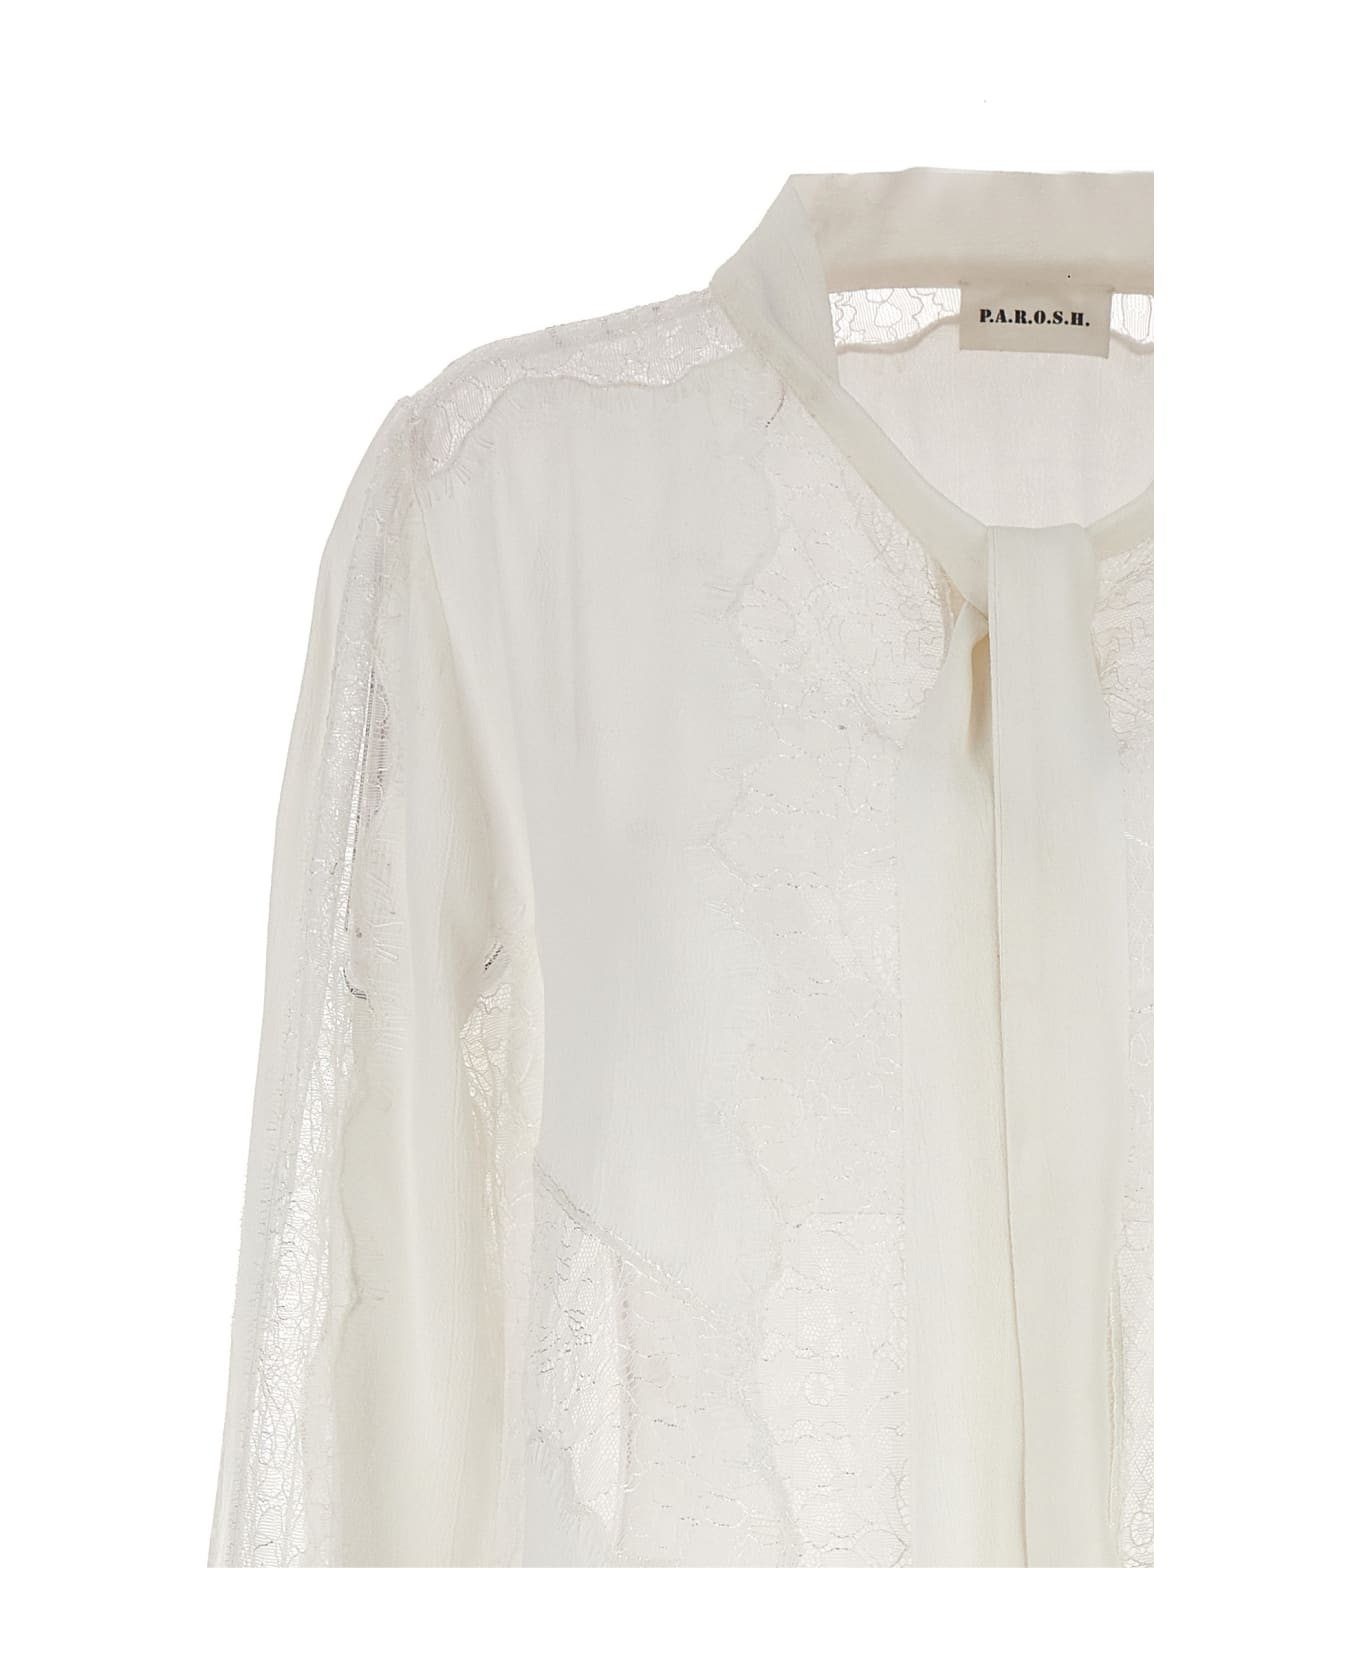 Parosh Lace Shirt - White